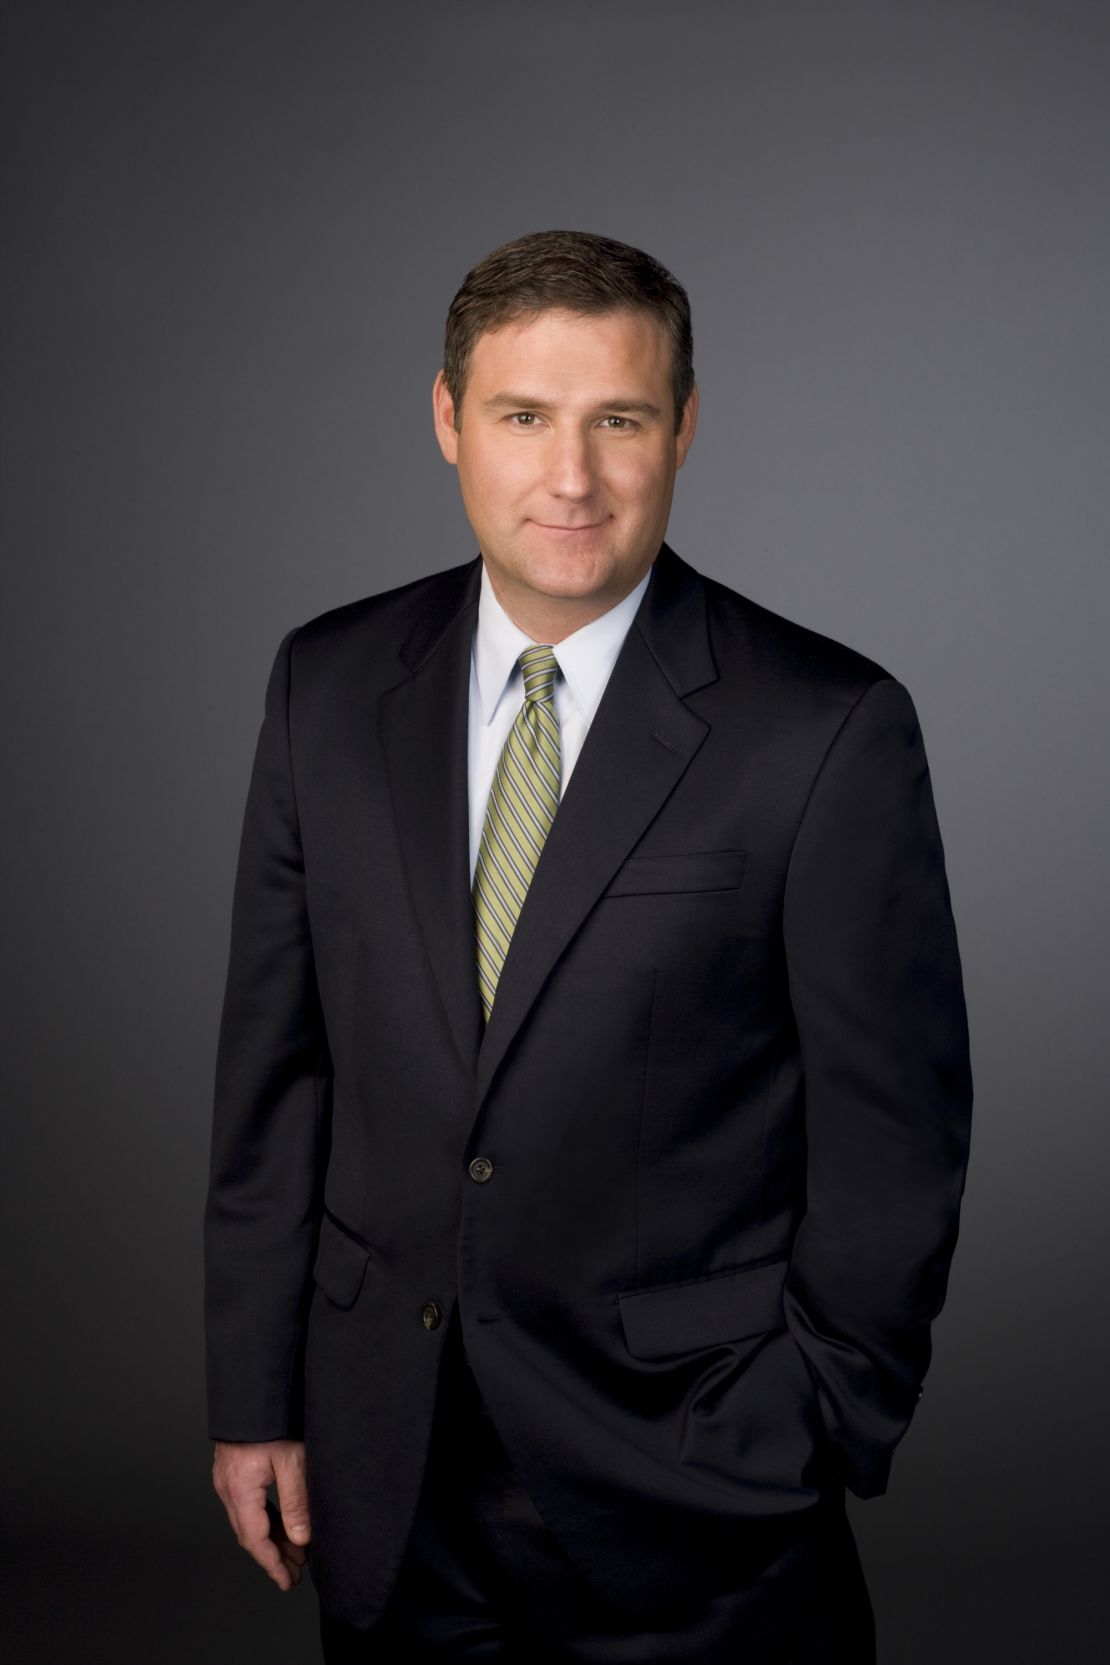 CNN political director Mark Preston